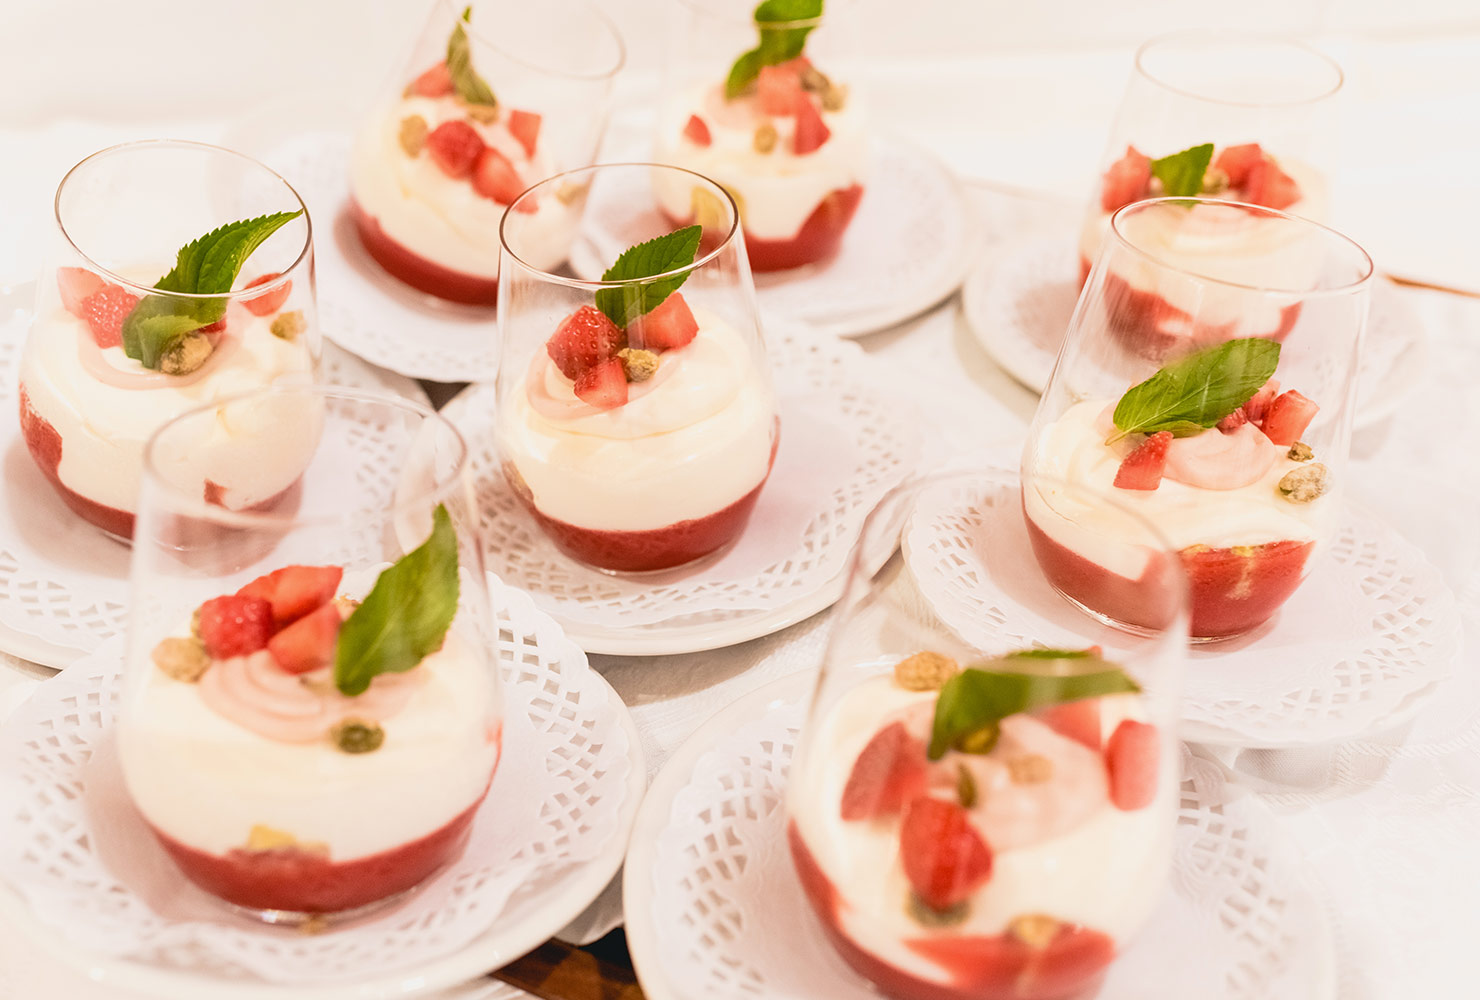 Plates of strawberry pudding parfait desserts.